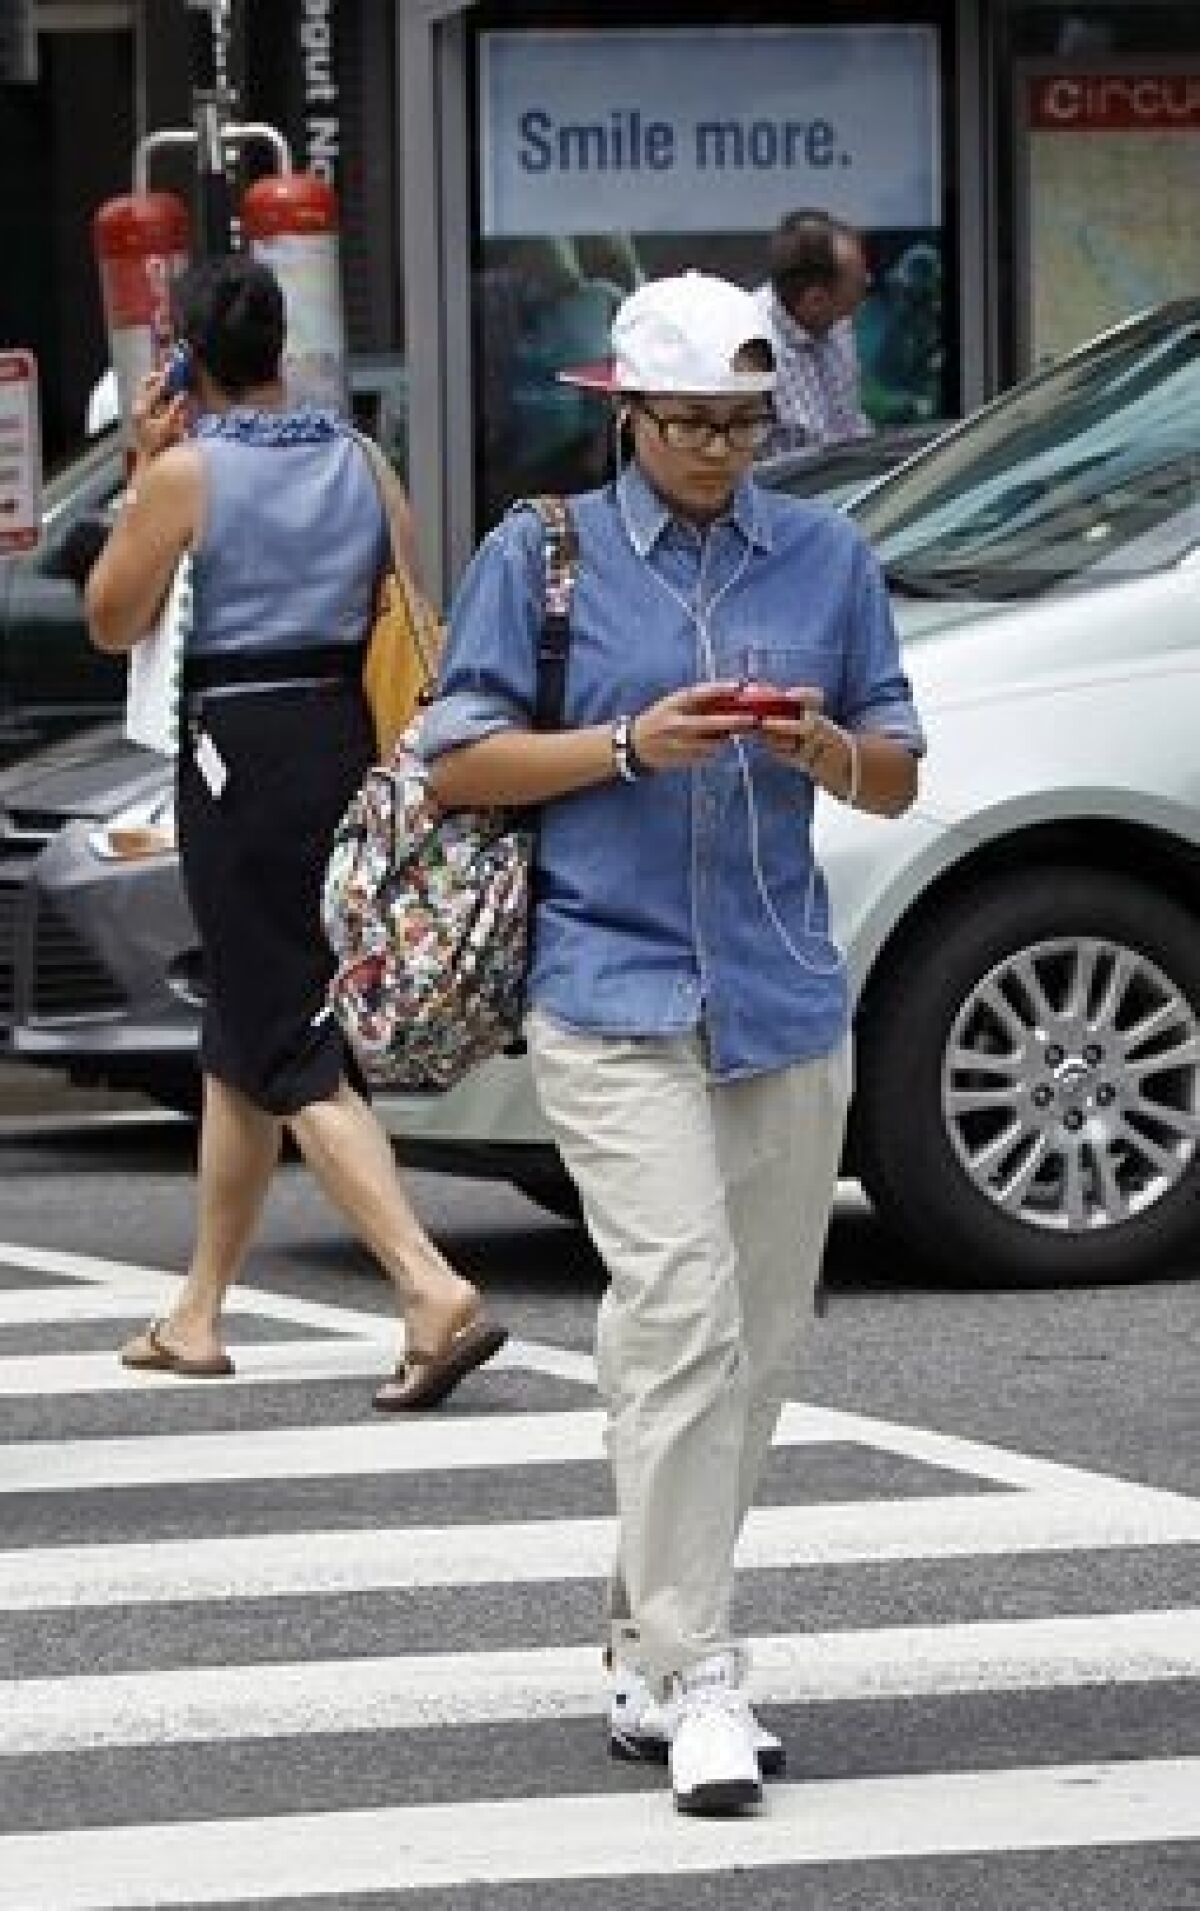 Two Washington D.C. pedestrians appear to be focusing on their phones more than their situation around them. (AP Photo/Pablo Martinez Monsivais)